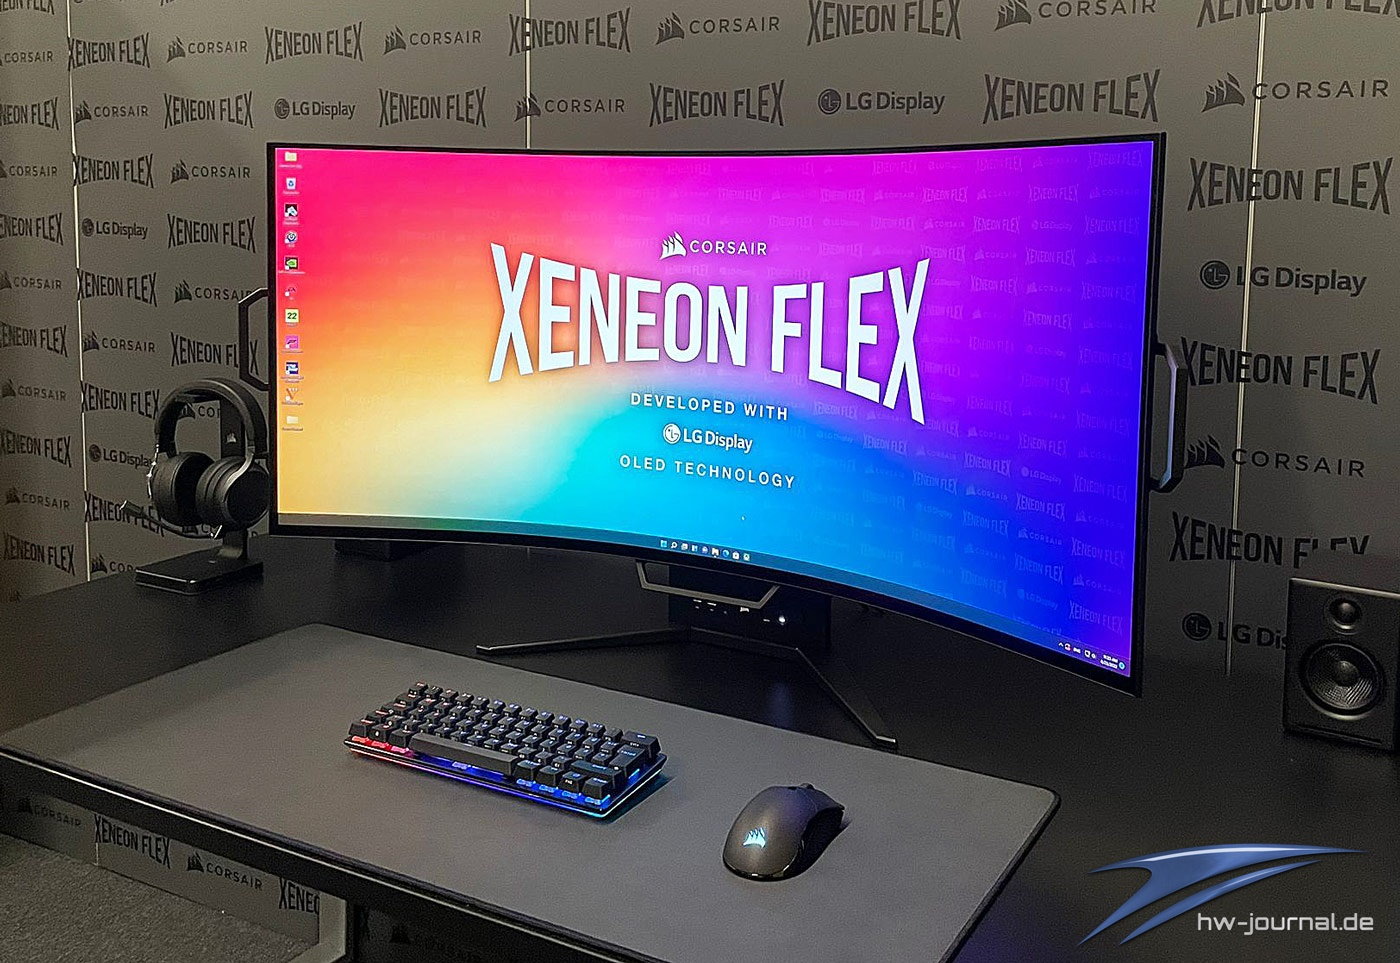 Full view of the immersive Corsair Xeneon Flex gaming monitor.